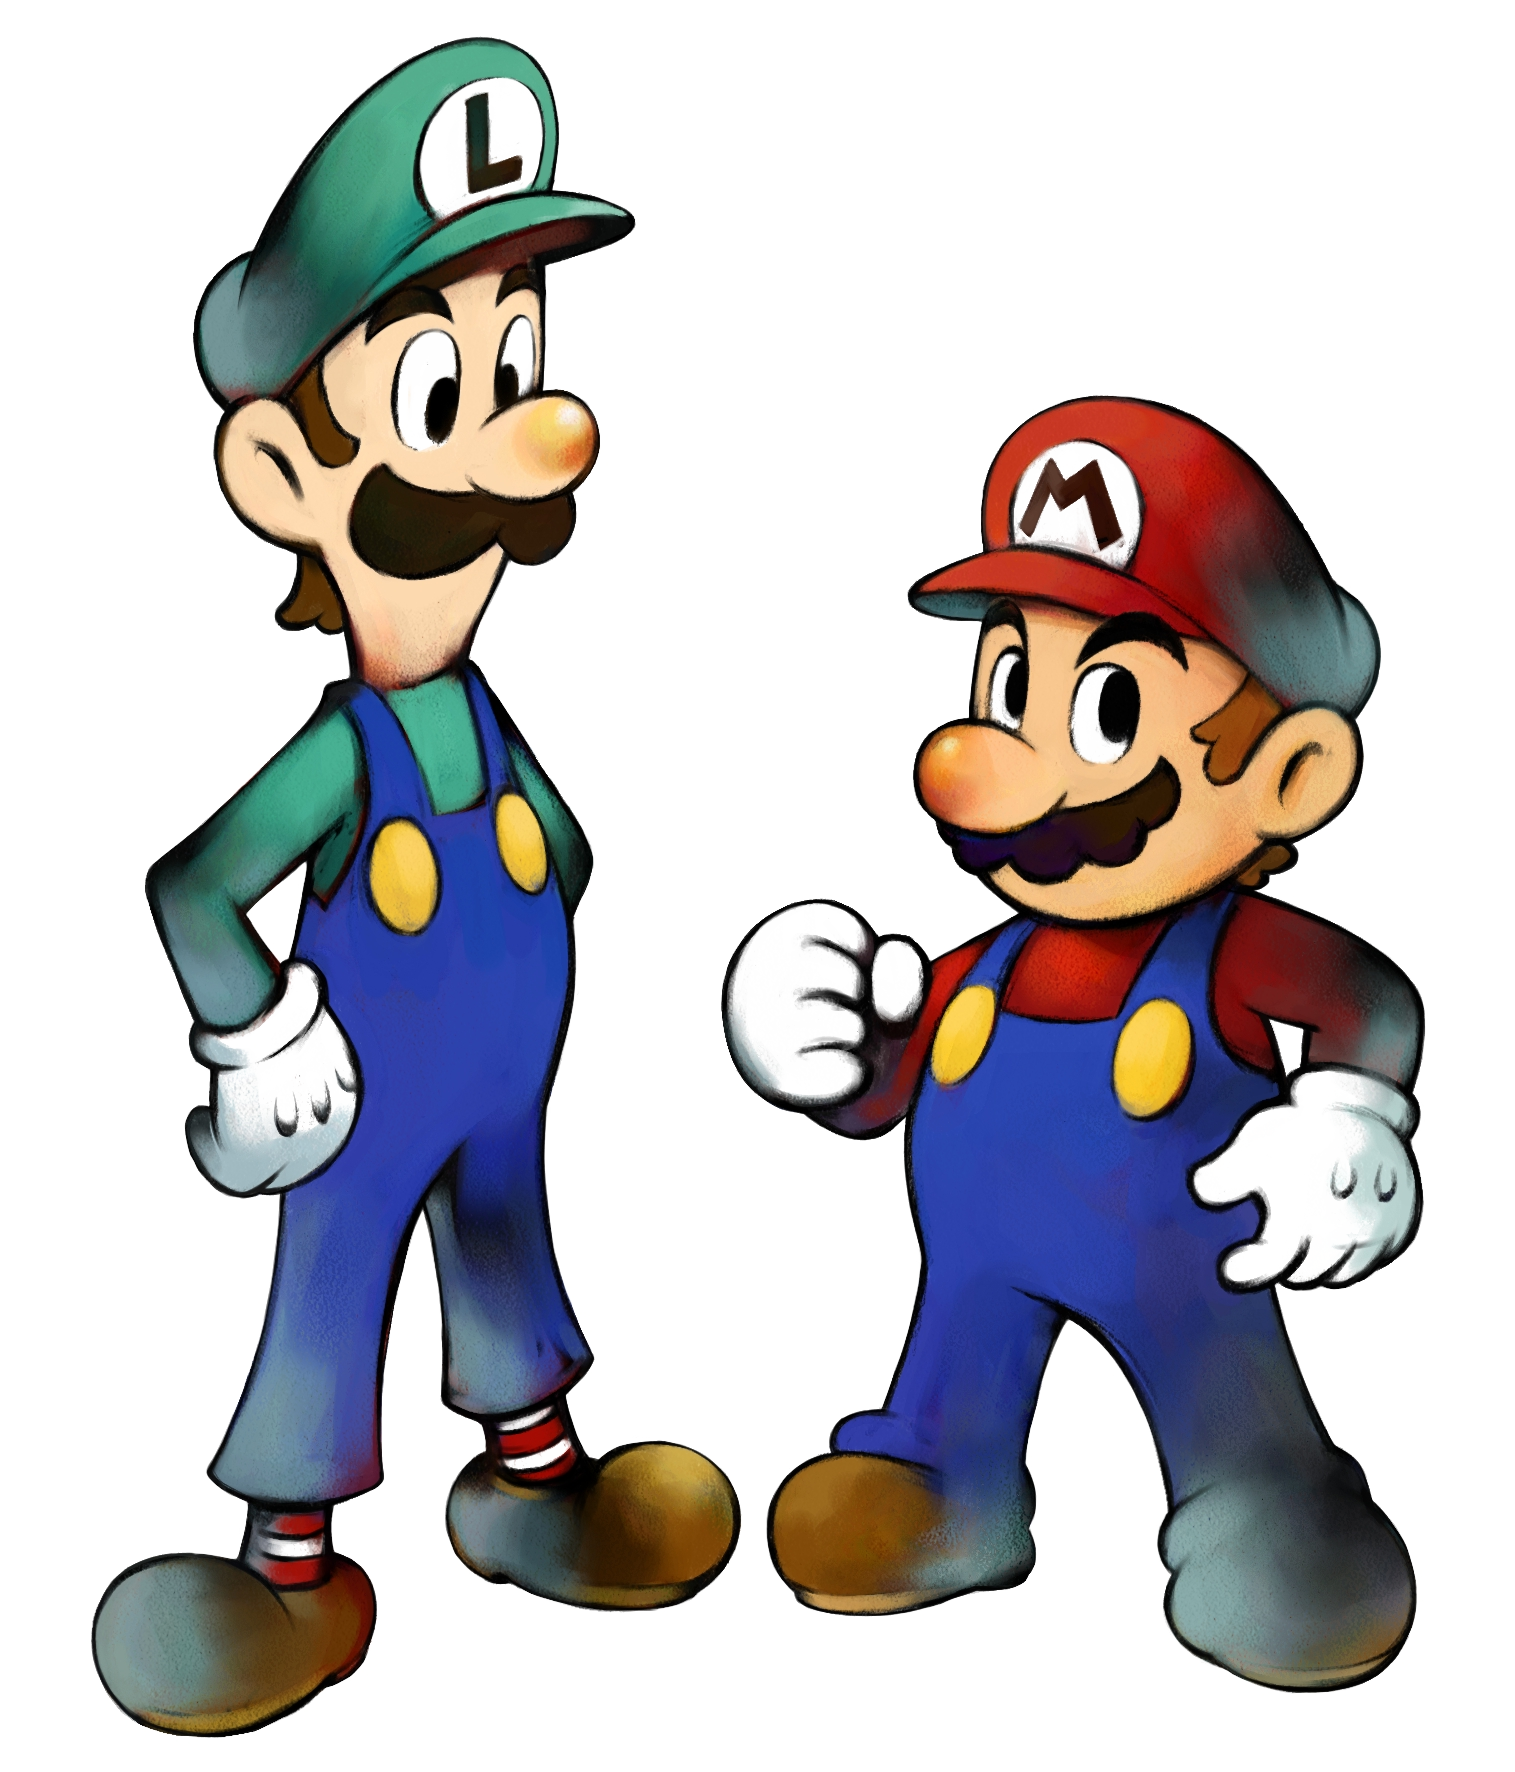 Mario и Luigi PNG фоновое изображение